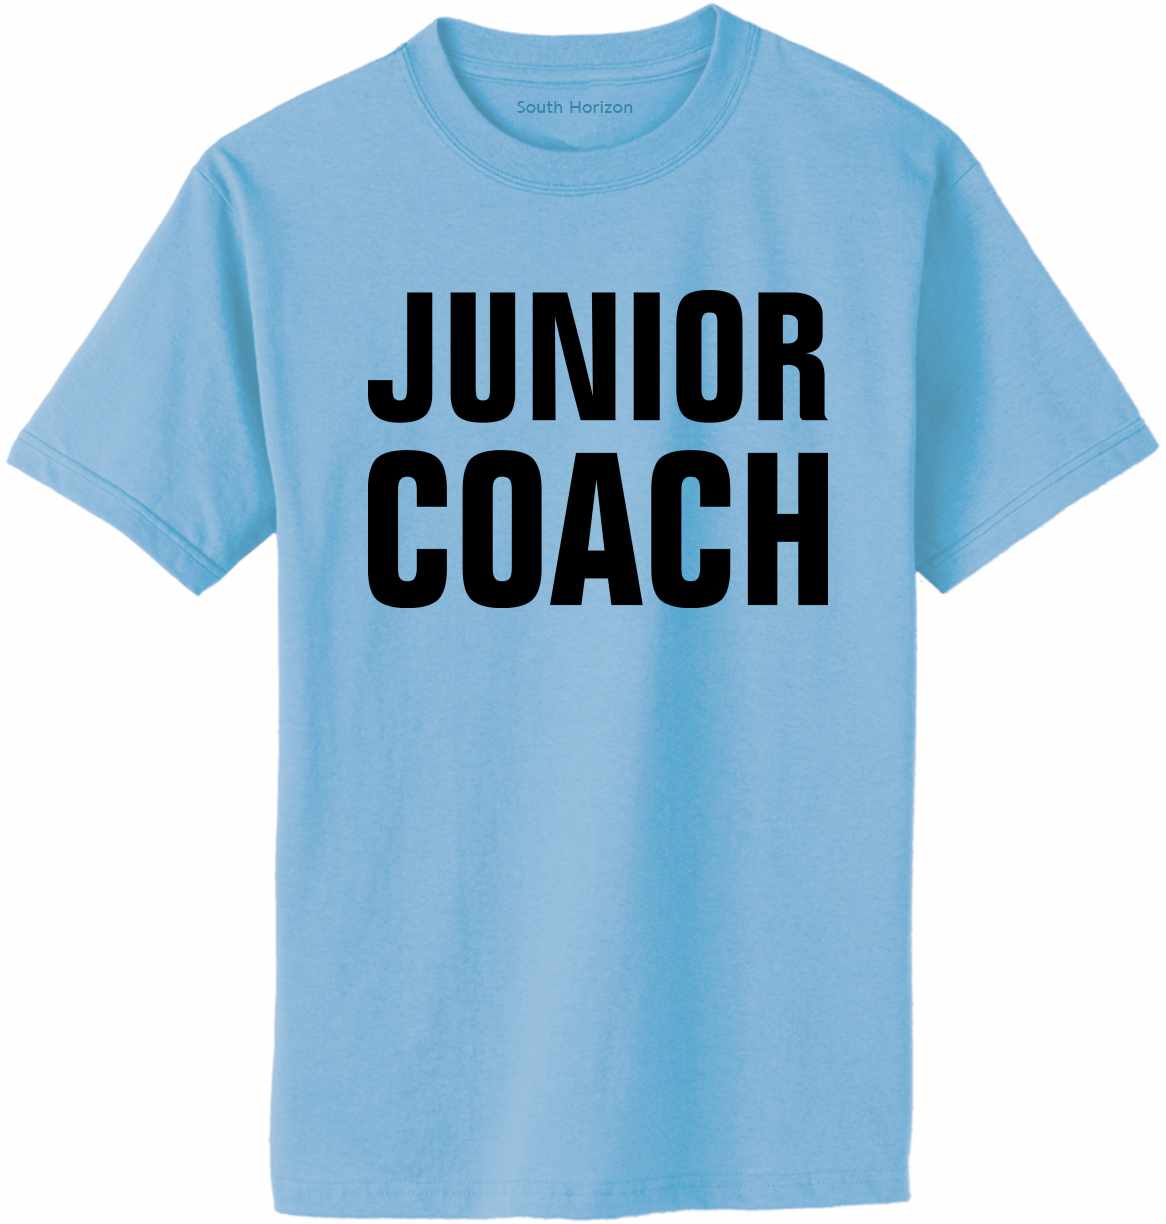 Junior Coach on Adult T-Shirt (#1213-1)